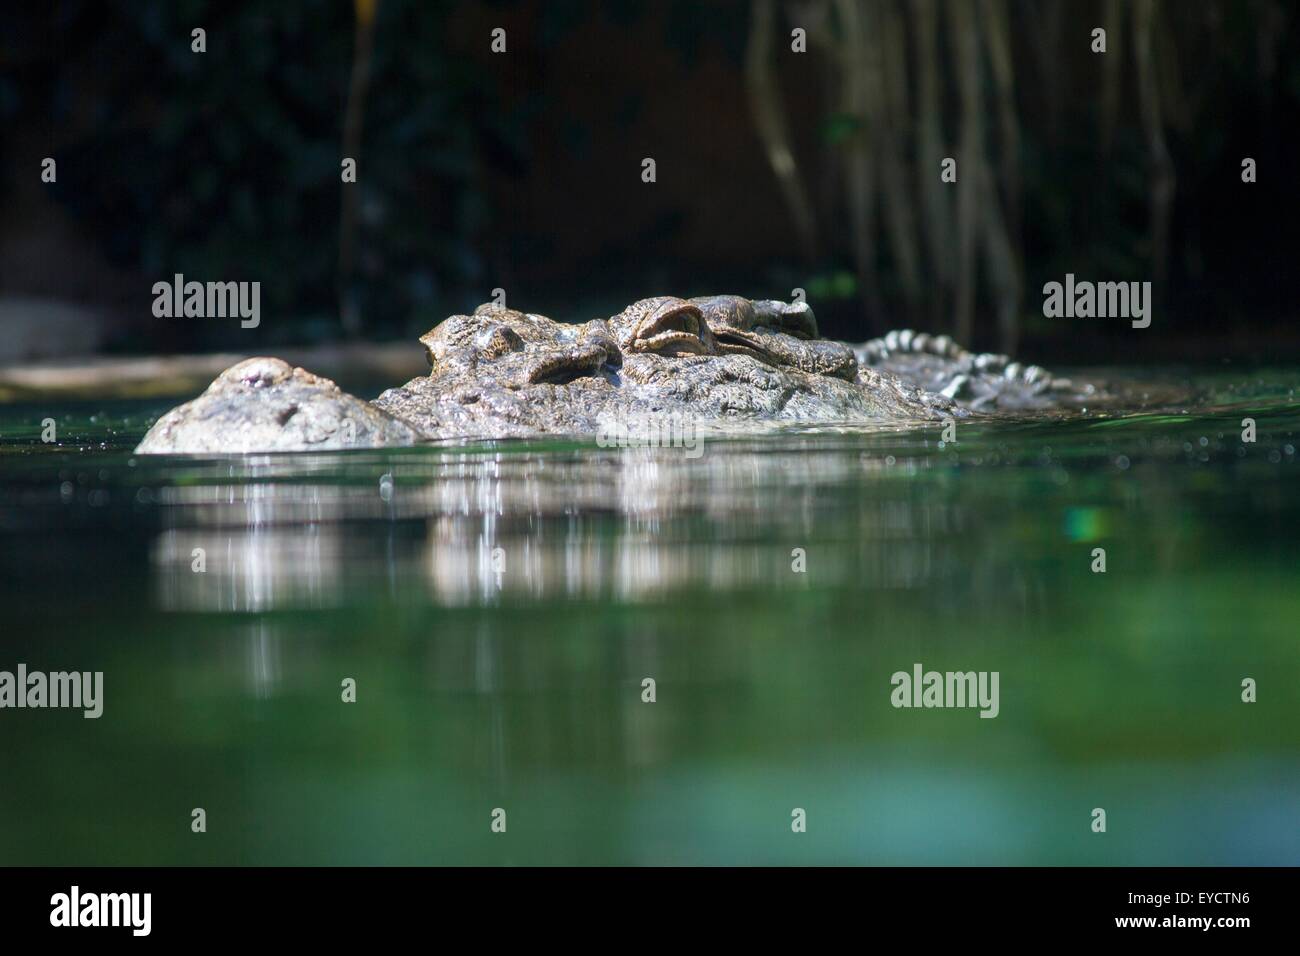 El cocodrilo de agua salada en agua, el nivel de superficie ver Foto de stock